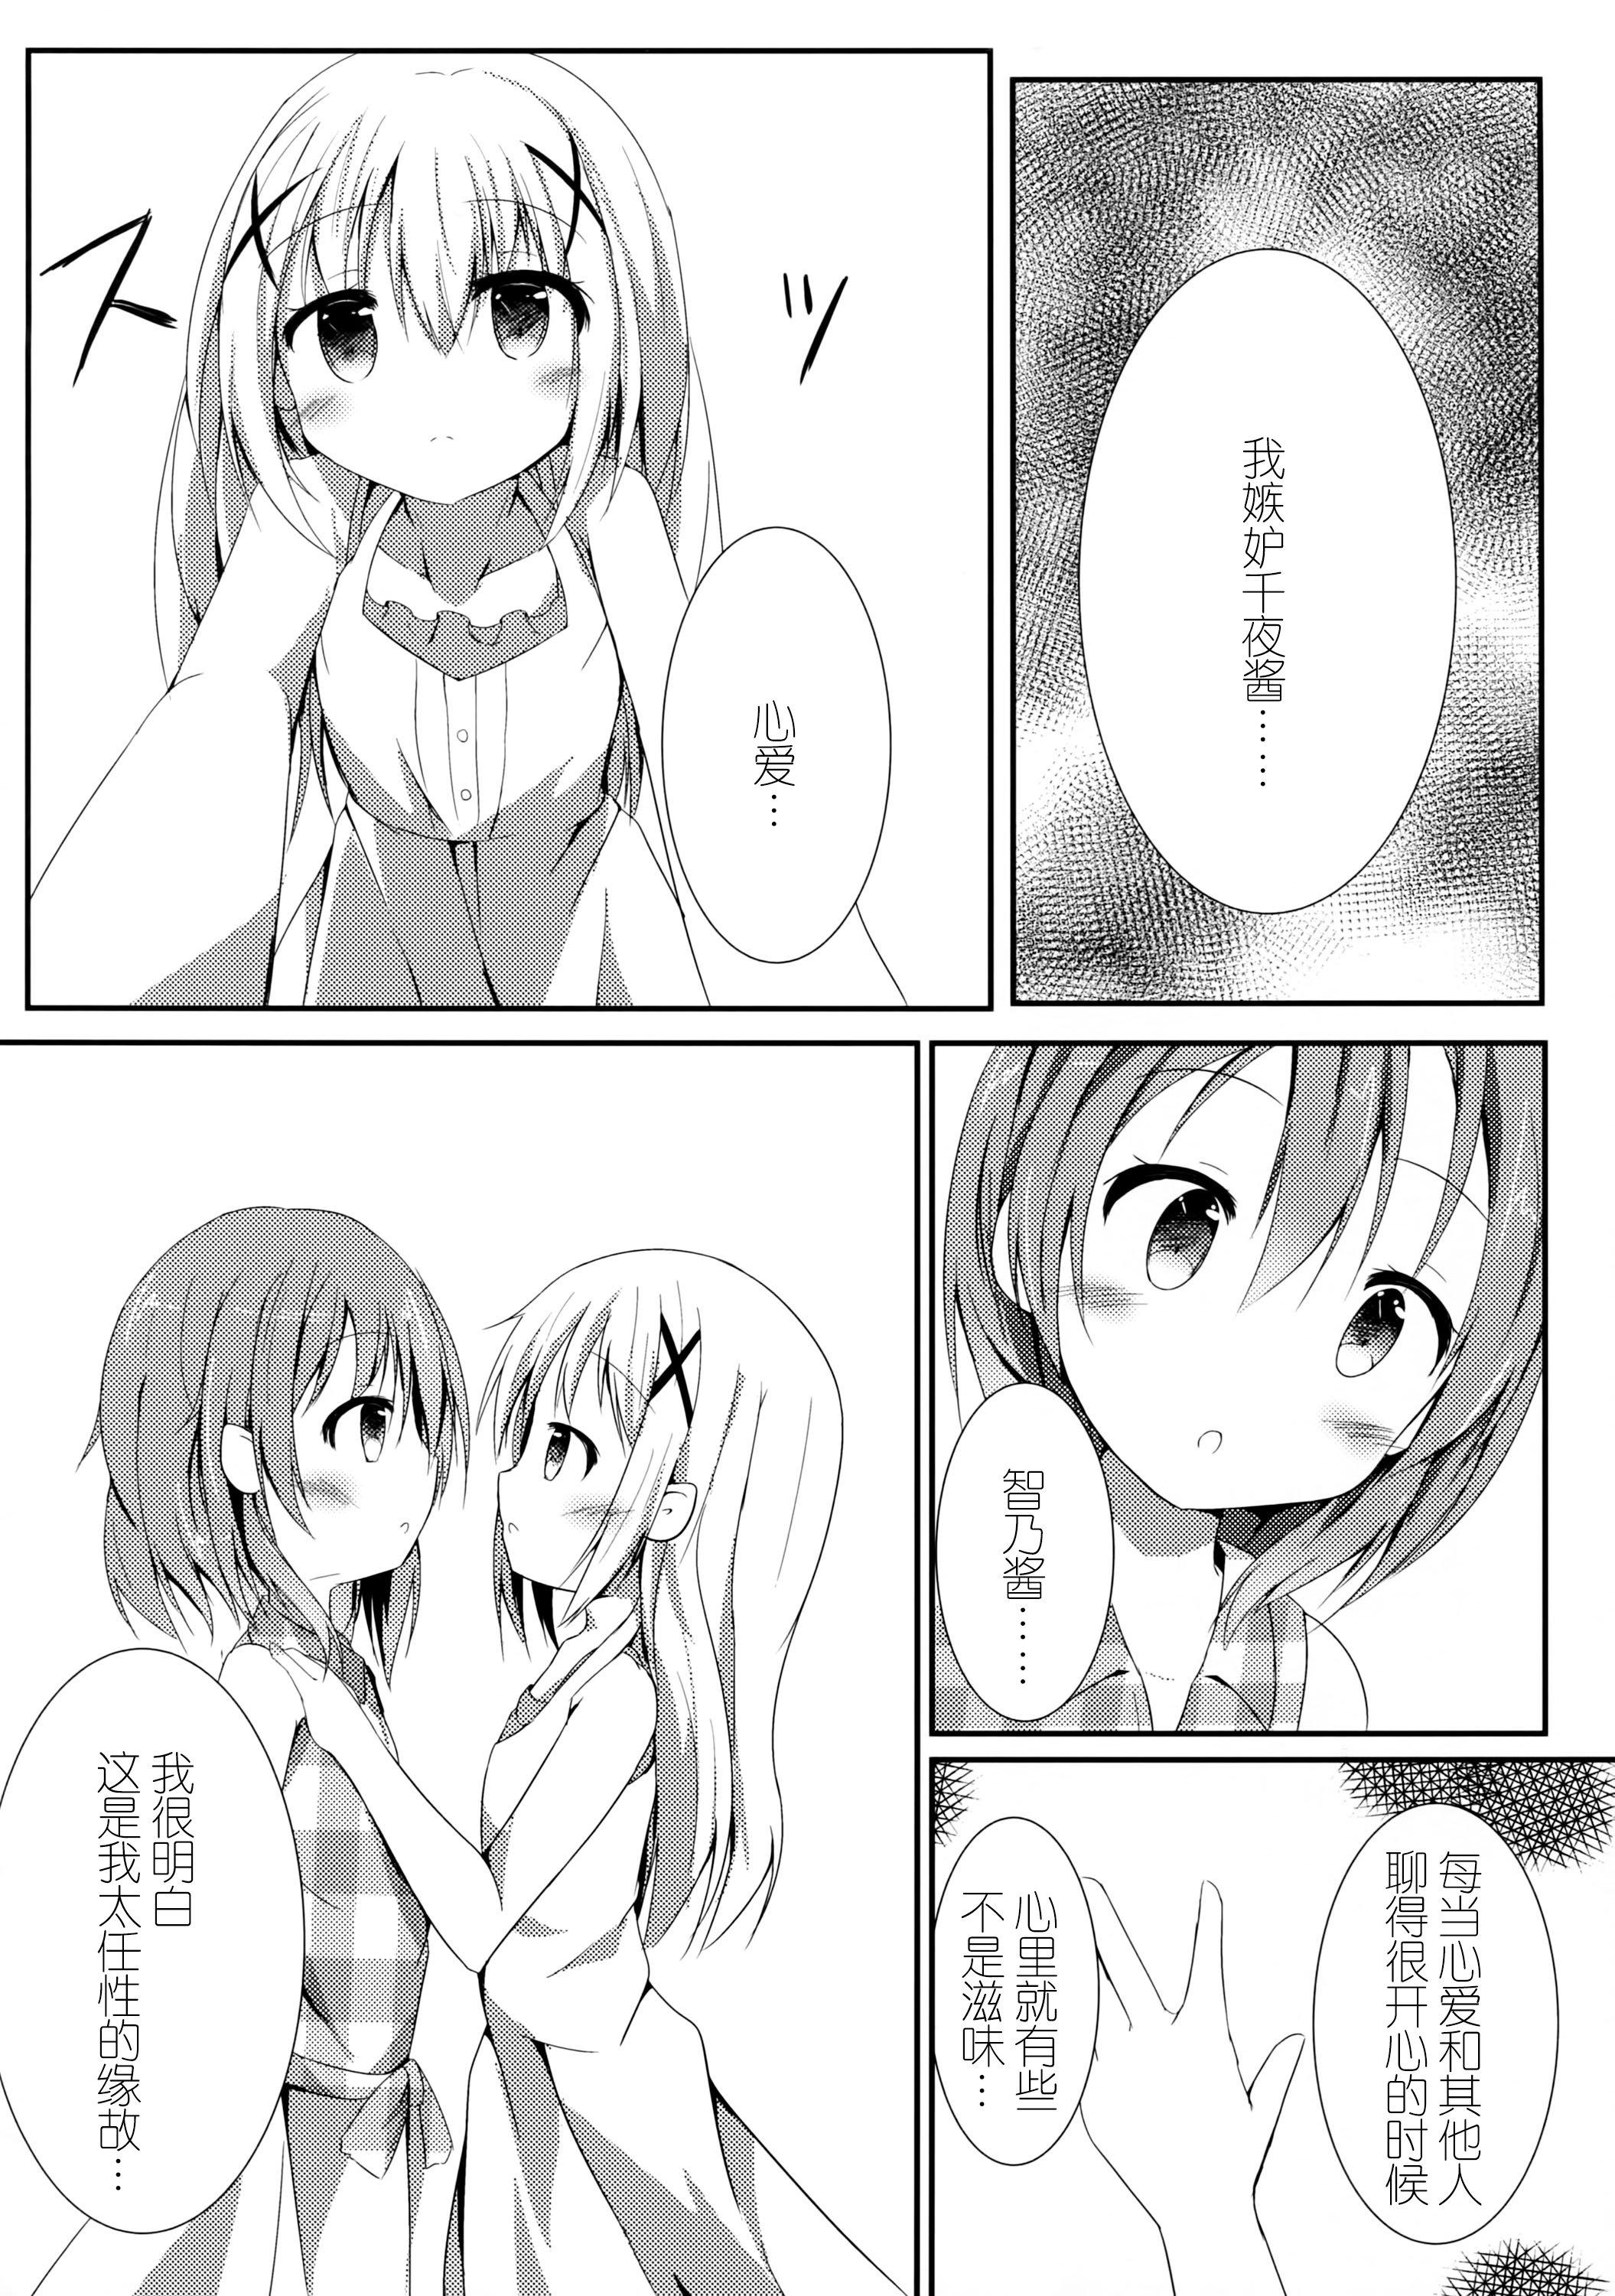 Spread Sister or Not Sister?? - Gochuumon wa usagi desu ka Chick - Page 6